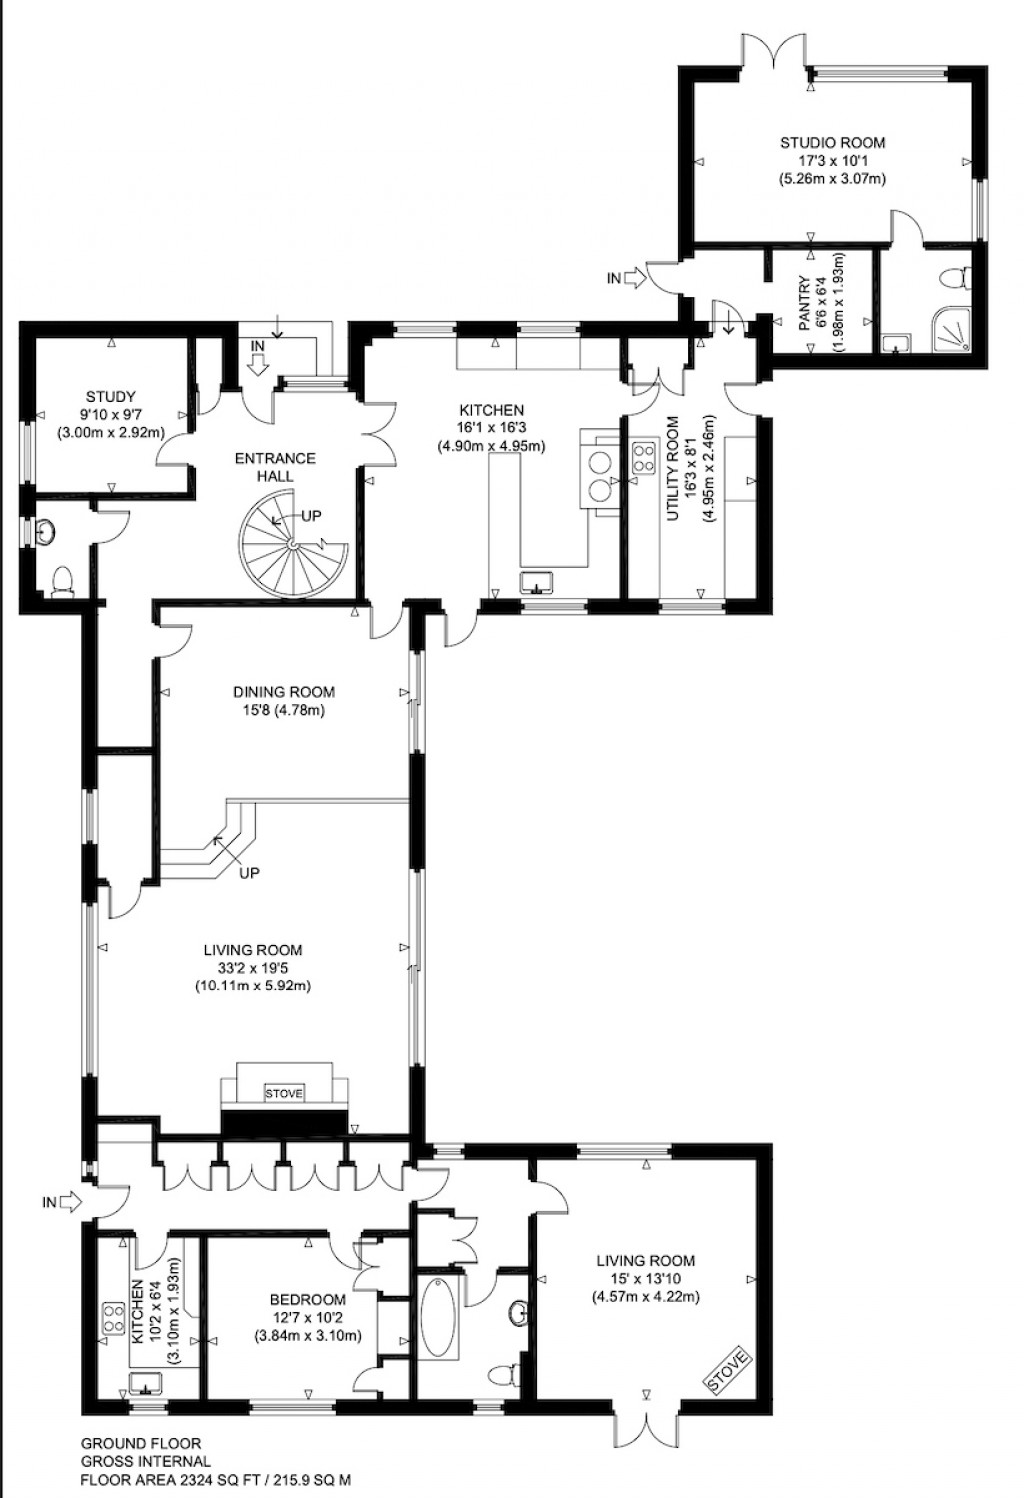 Floorplans For Wintonfield House, New Winton, Tranent, East Lothian